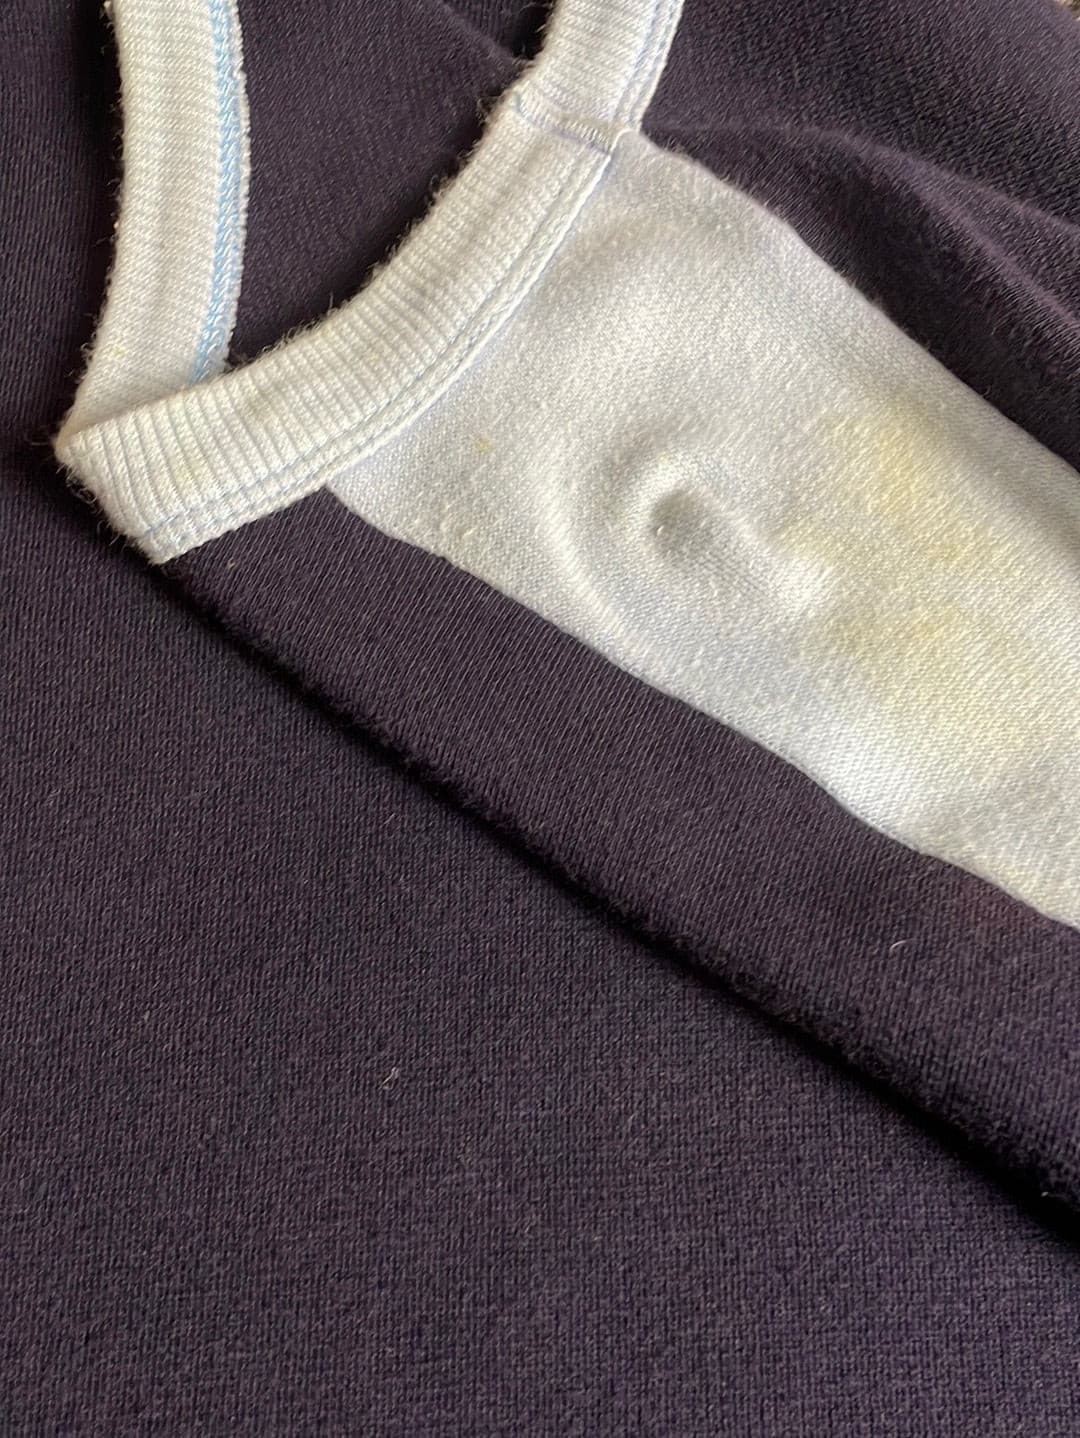 Vintage Puma Colorblock Sweatshirt Blue // X-Small - RHAGHOUSE VINTAGE